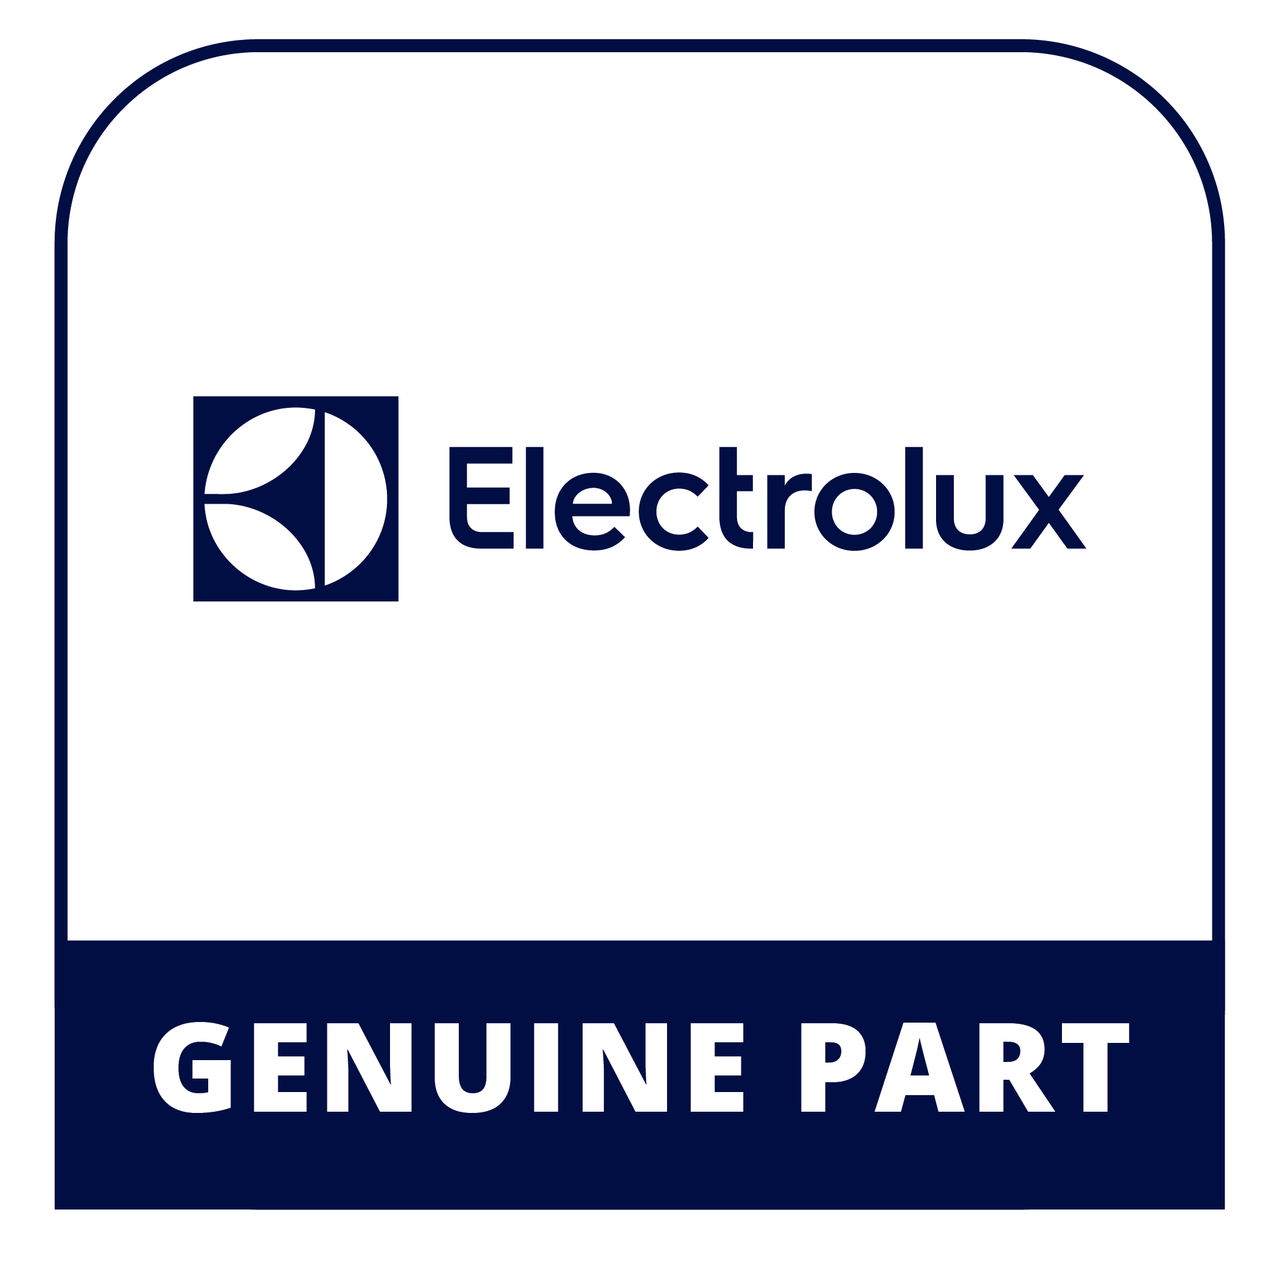 Frigidaire - Electrolux 316509600 Insulation - Genuine Electrolux Part